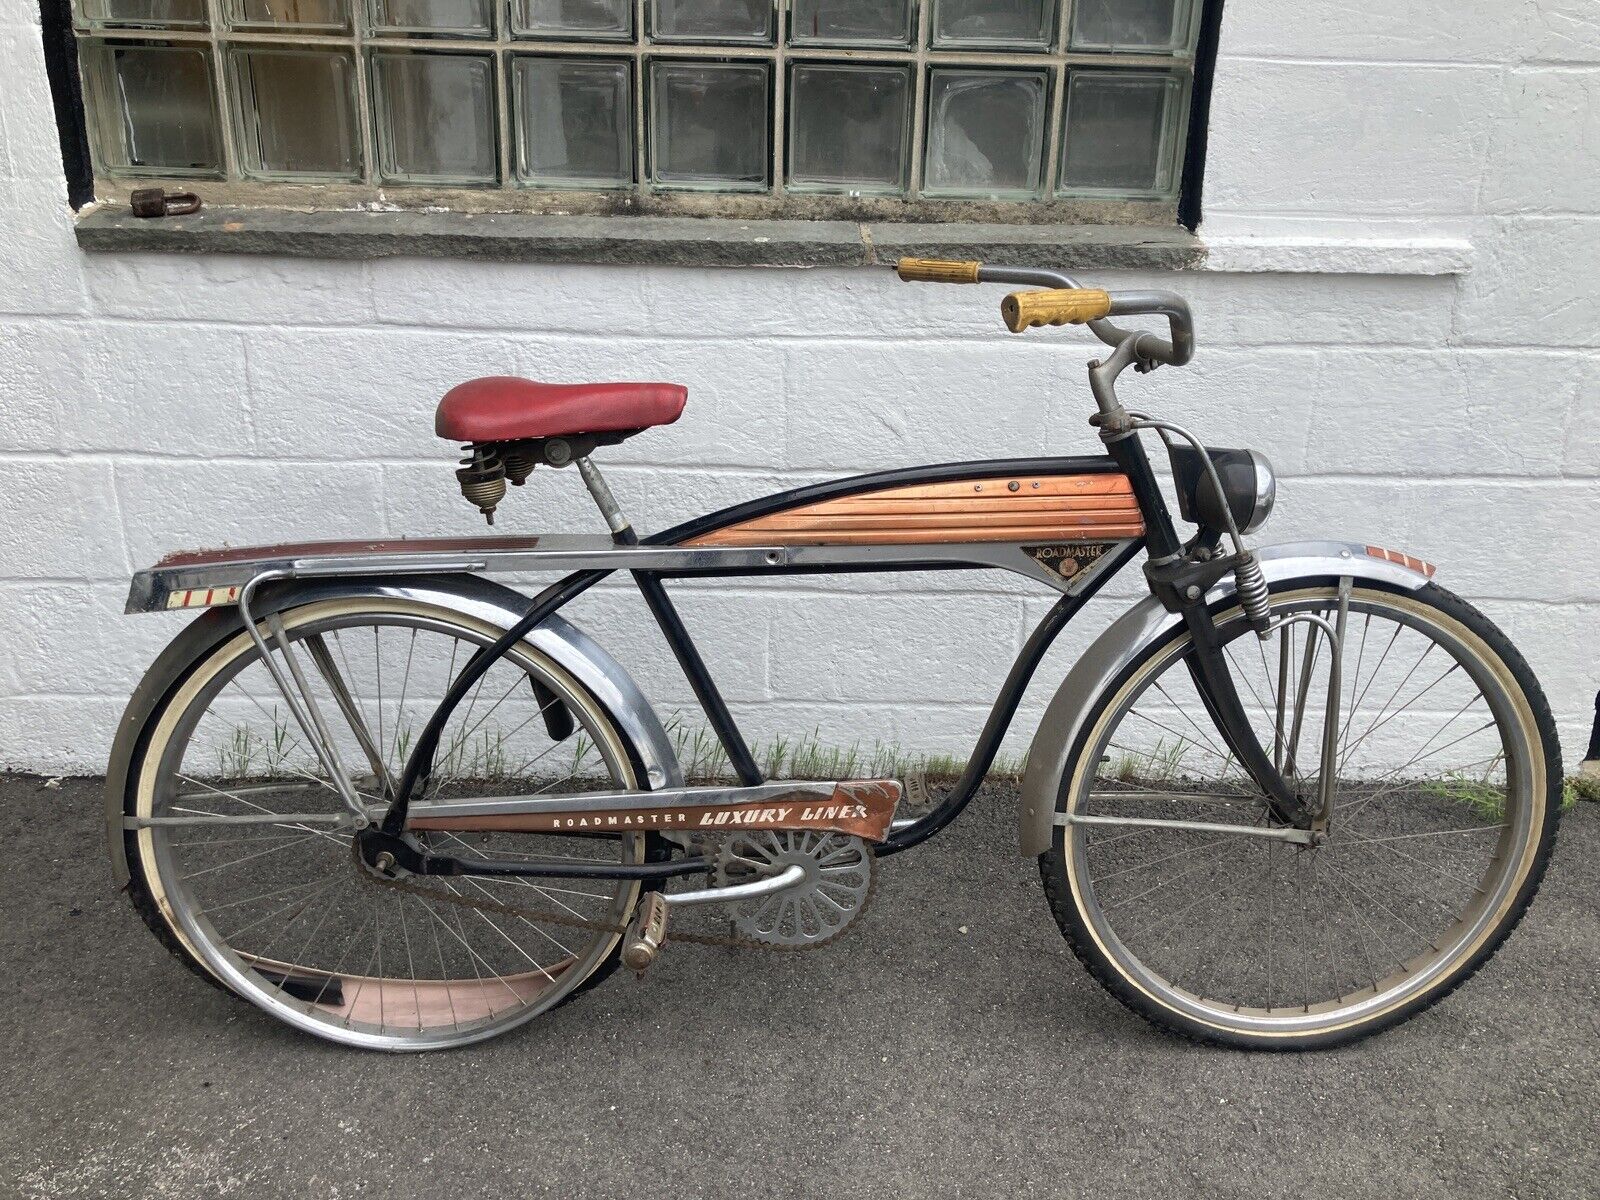 Roadmaster Luxury Liner Antique Bicycle